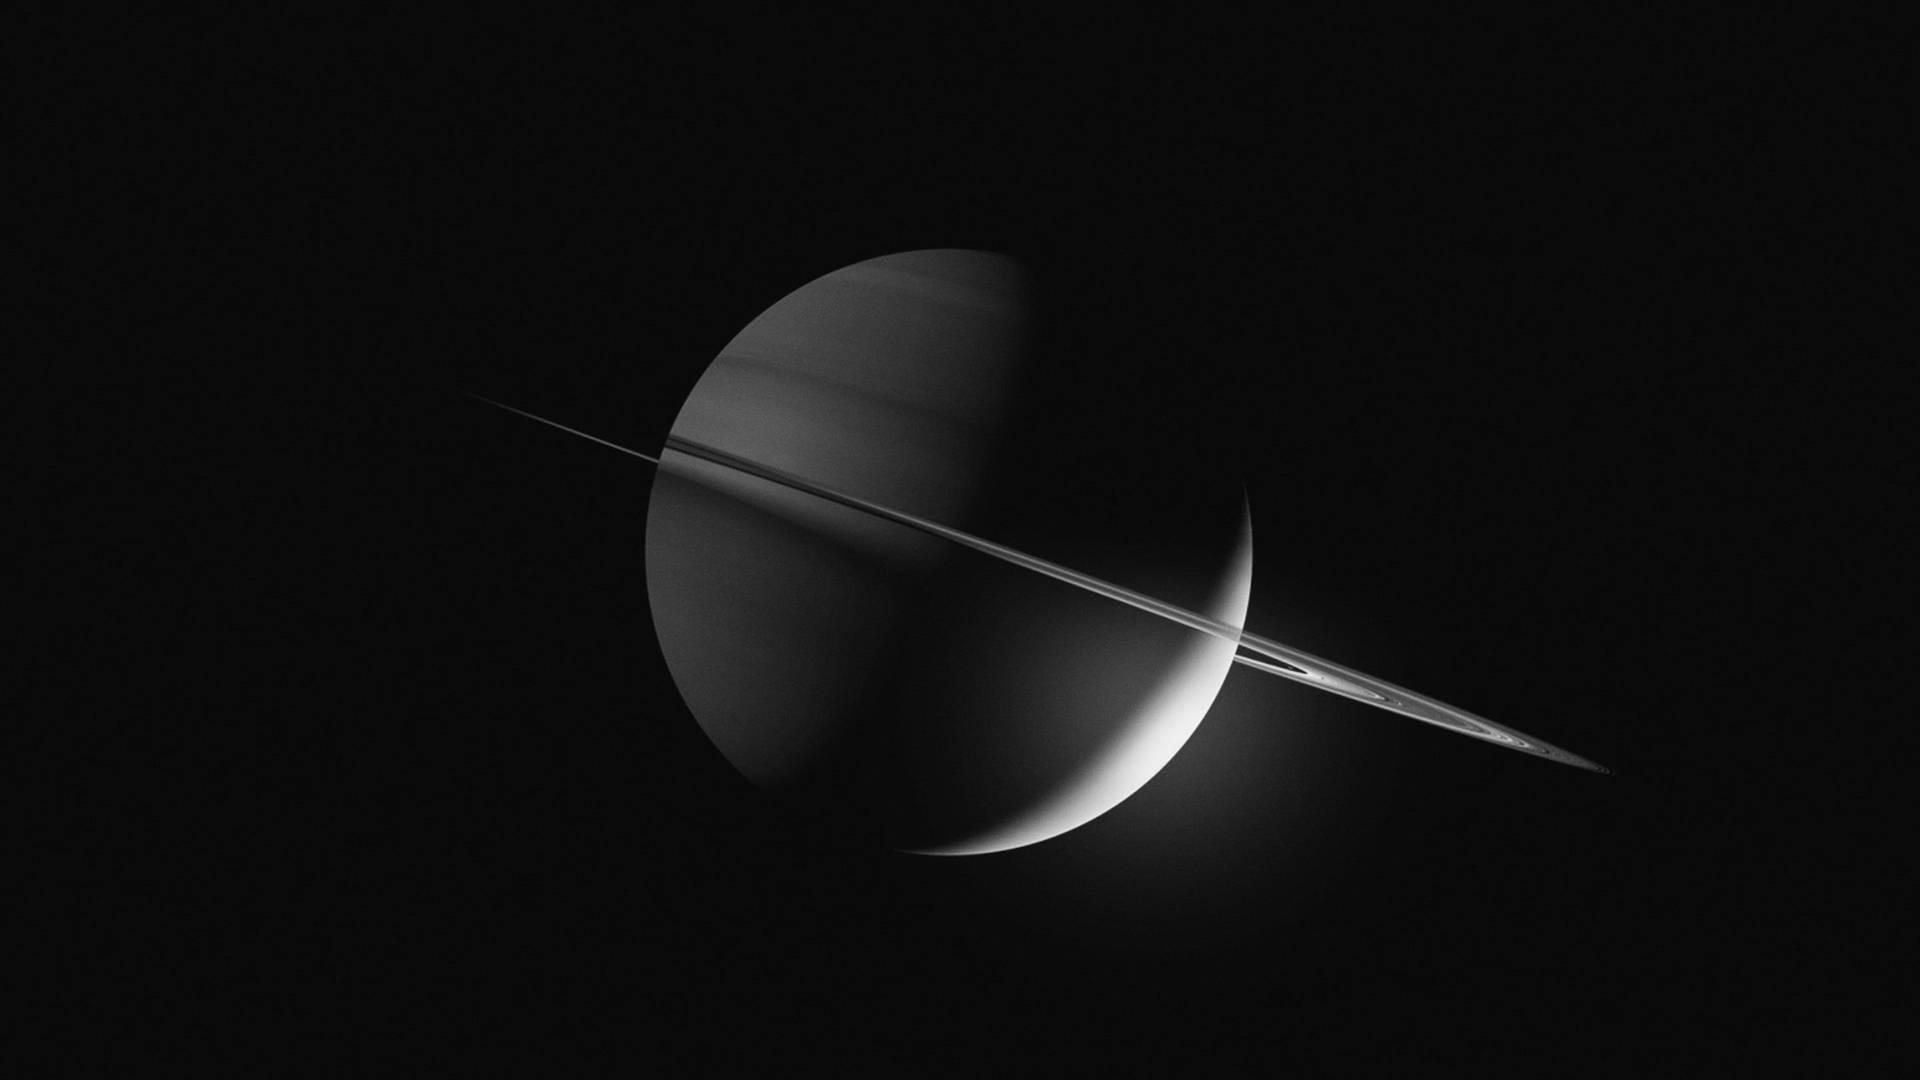 Monochrome Saturn 4k Wallpaper